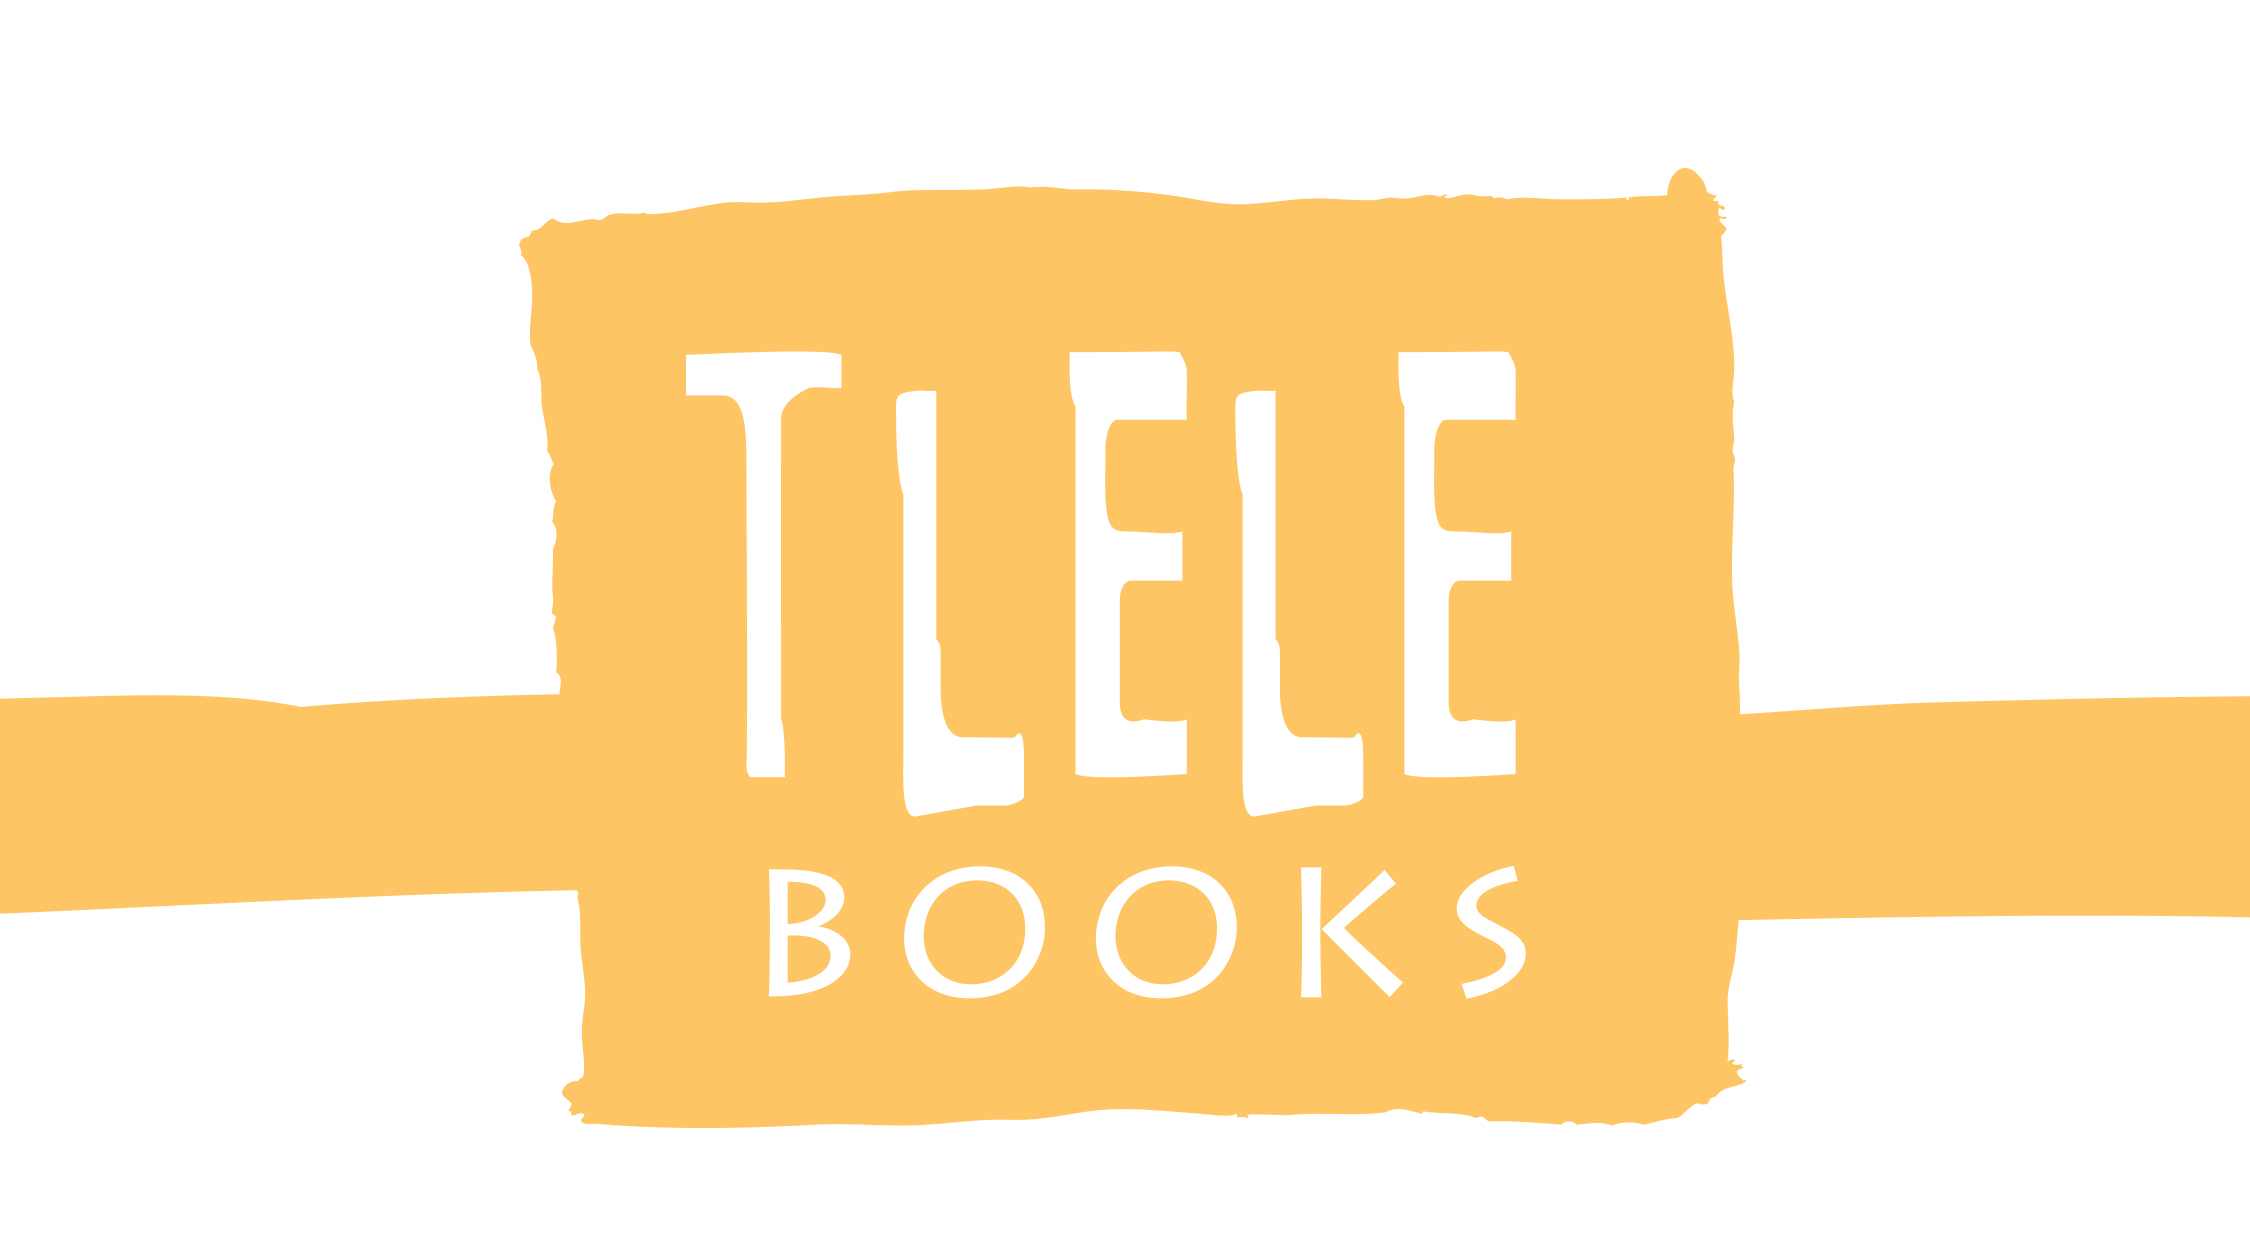 Tlelebooks Verlag